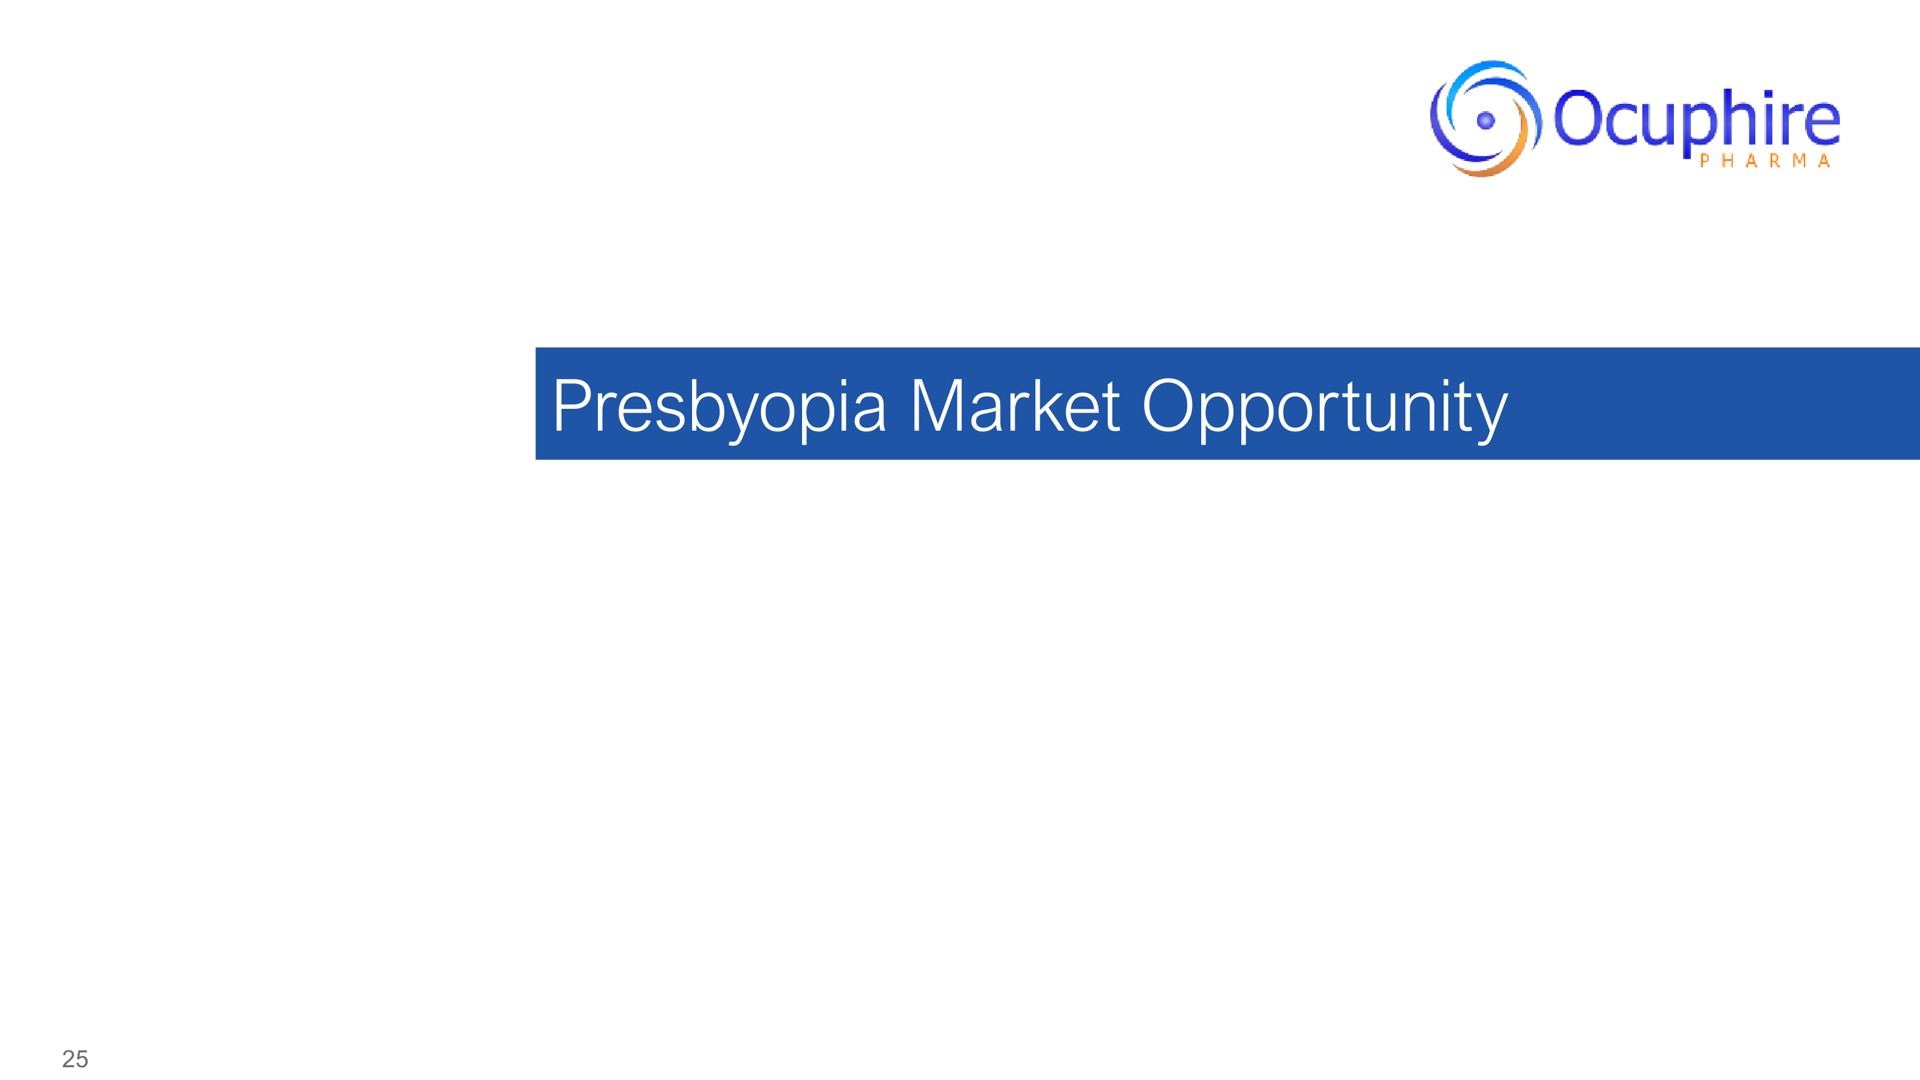 presbyopia market opportunity | Ocuphire Pharma